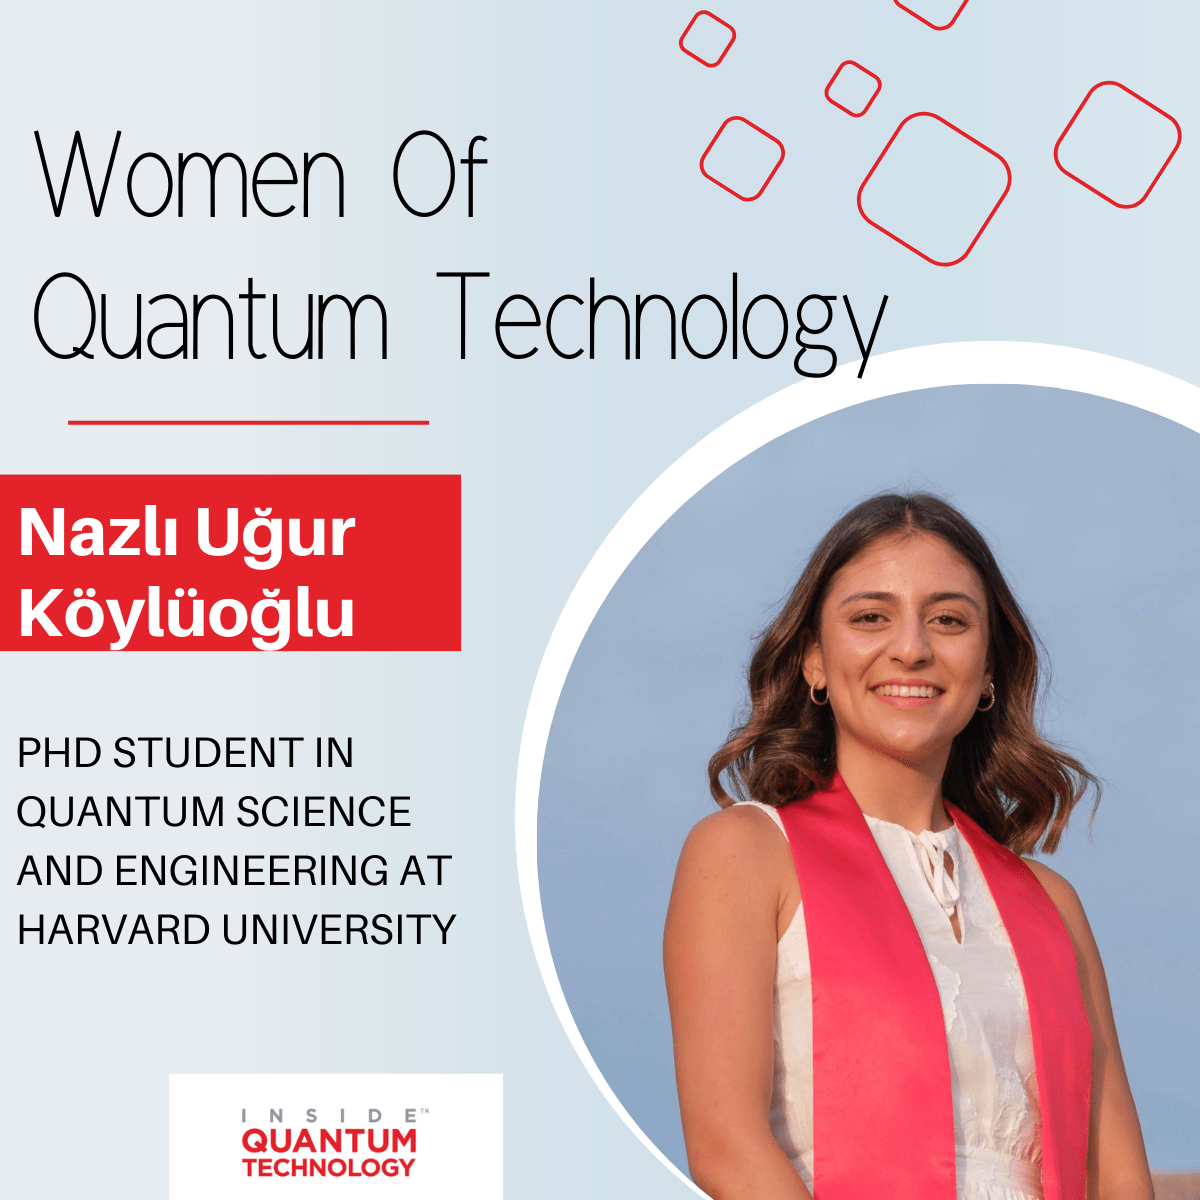 زنان فناوری کوانتومی: Nazlı Uğur Köylüoğlu از دانشگاه هاروارد - درون فناوری کوانتومی